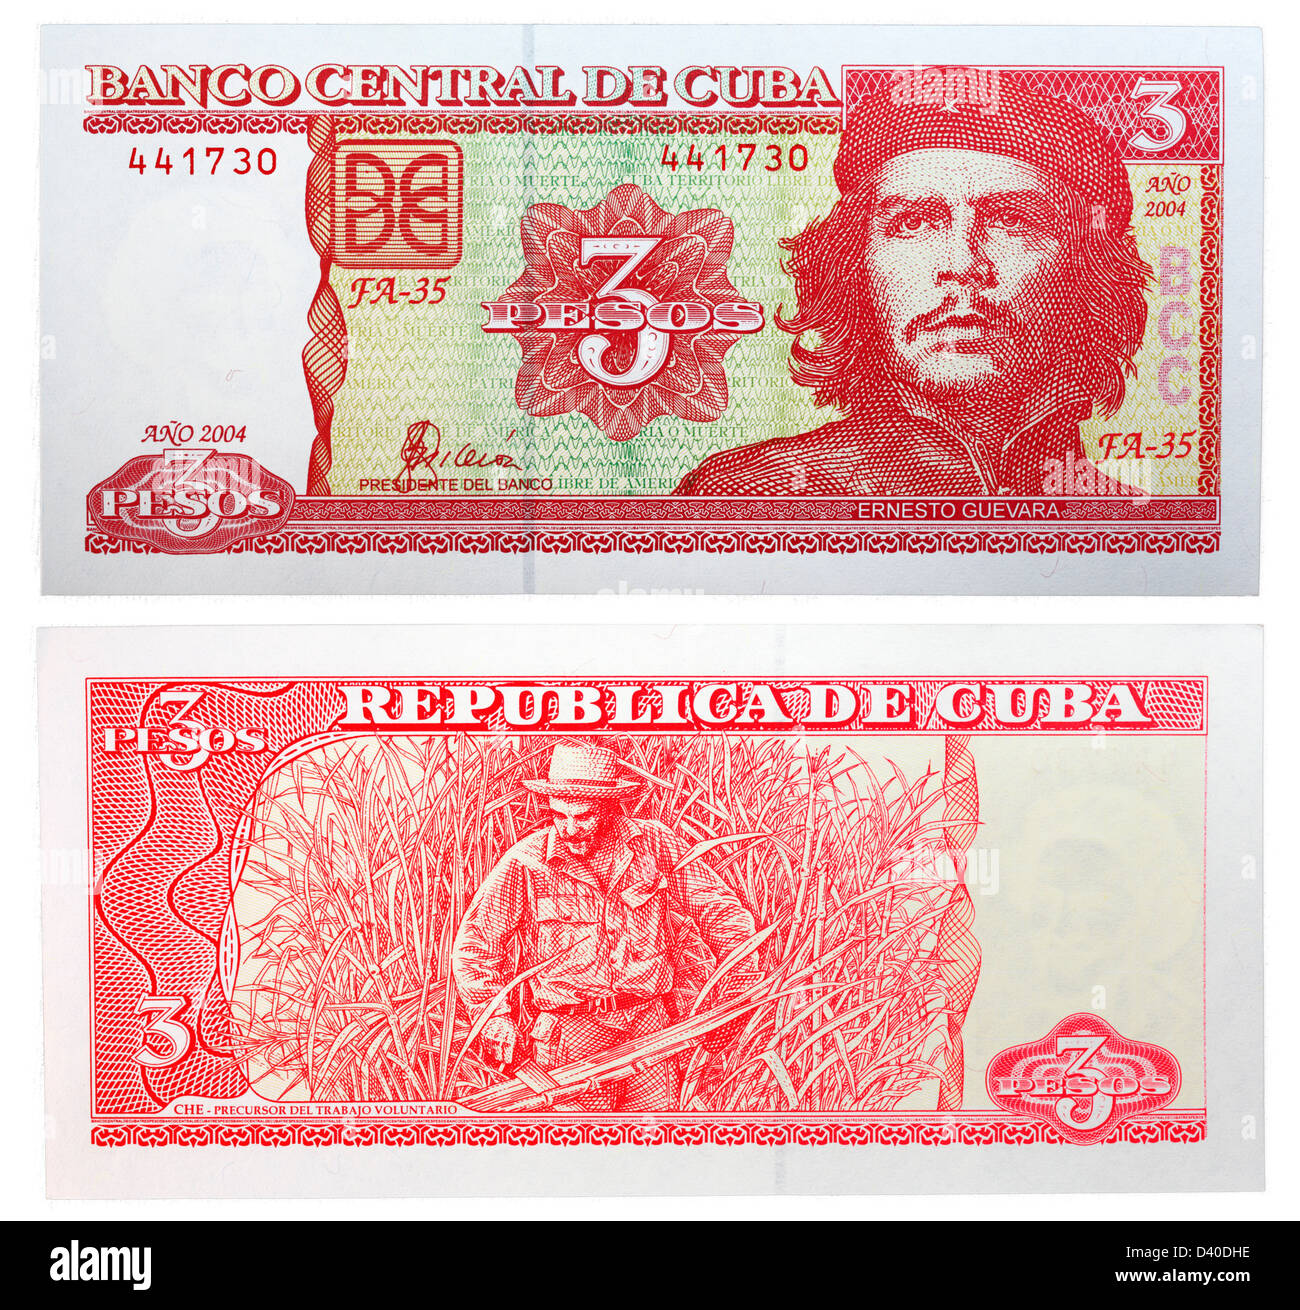 3 Pesos banknote, Che Guevara in sugar cane field, Cuba, 2004 Stock Photo